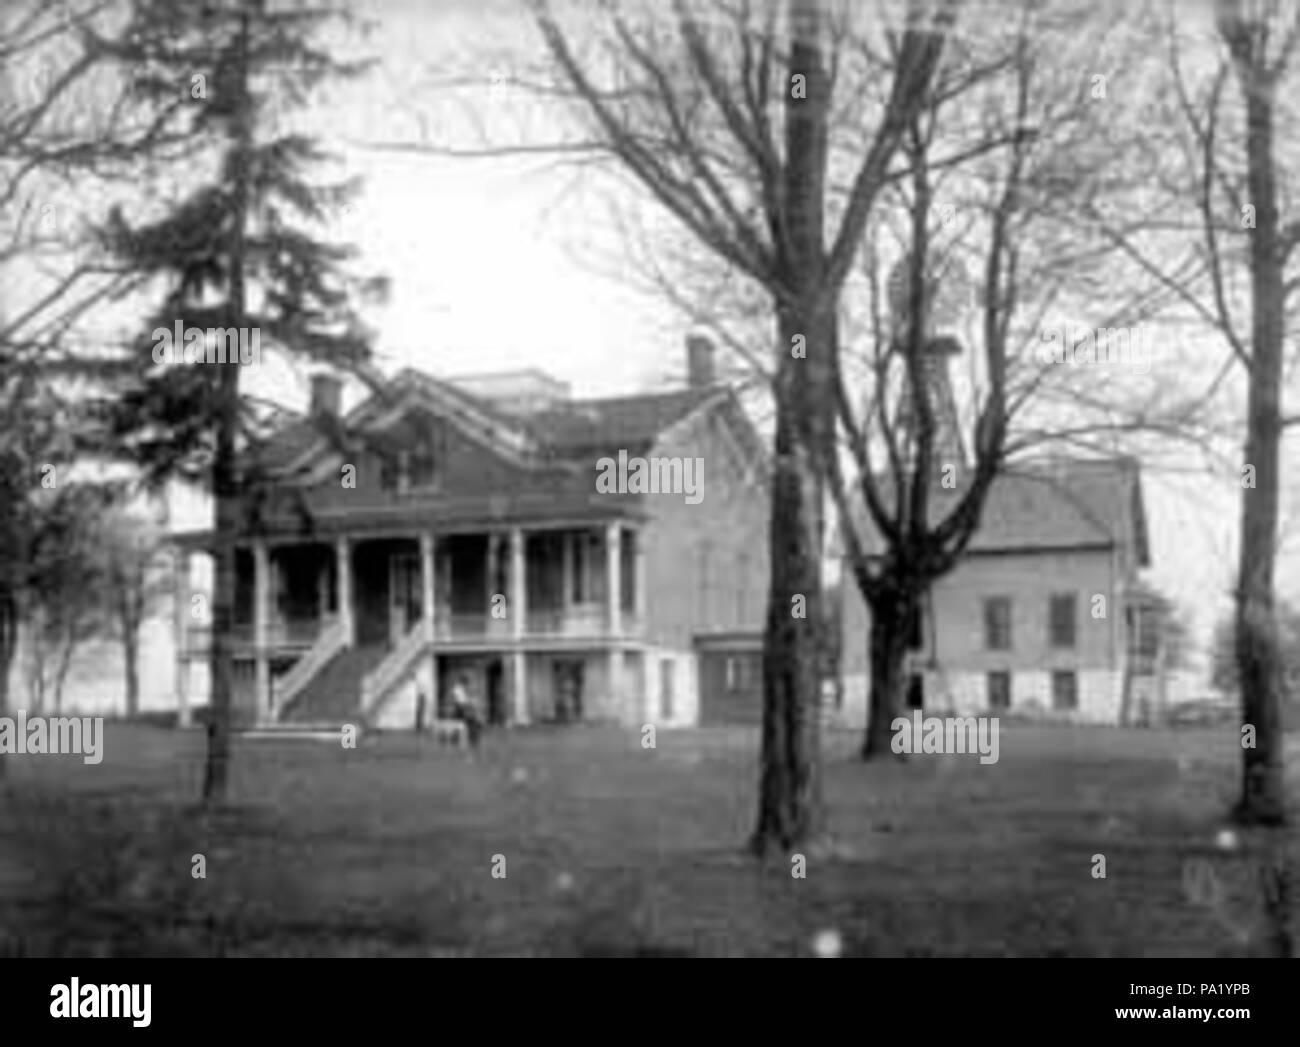 The 1900 house